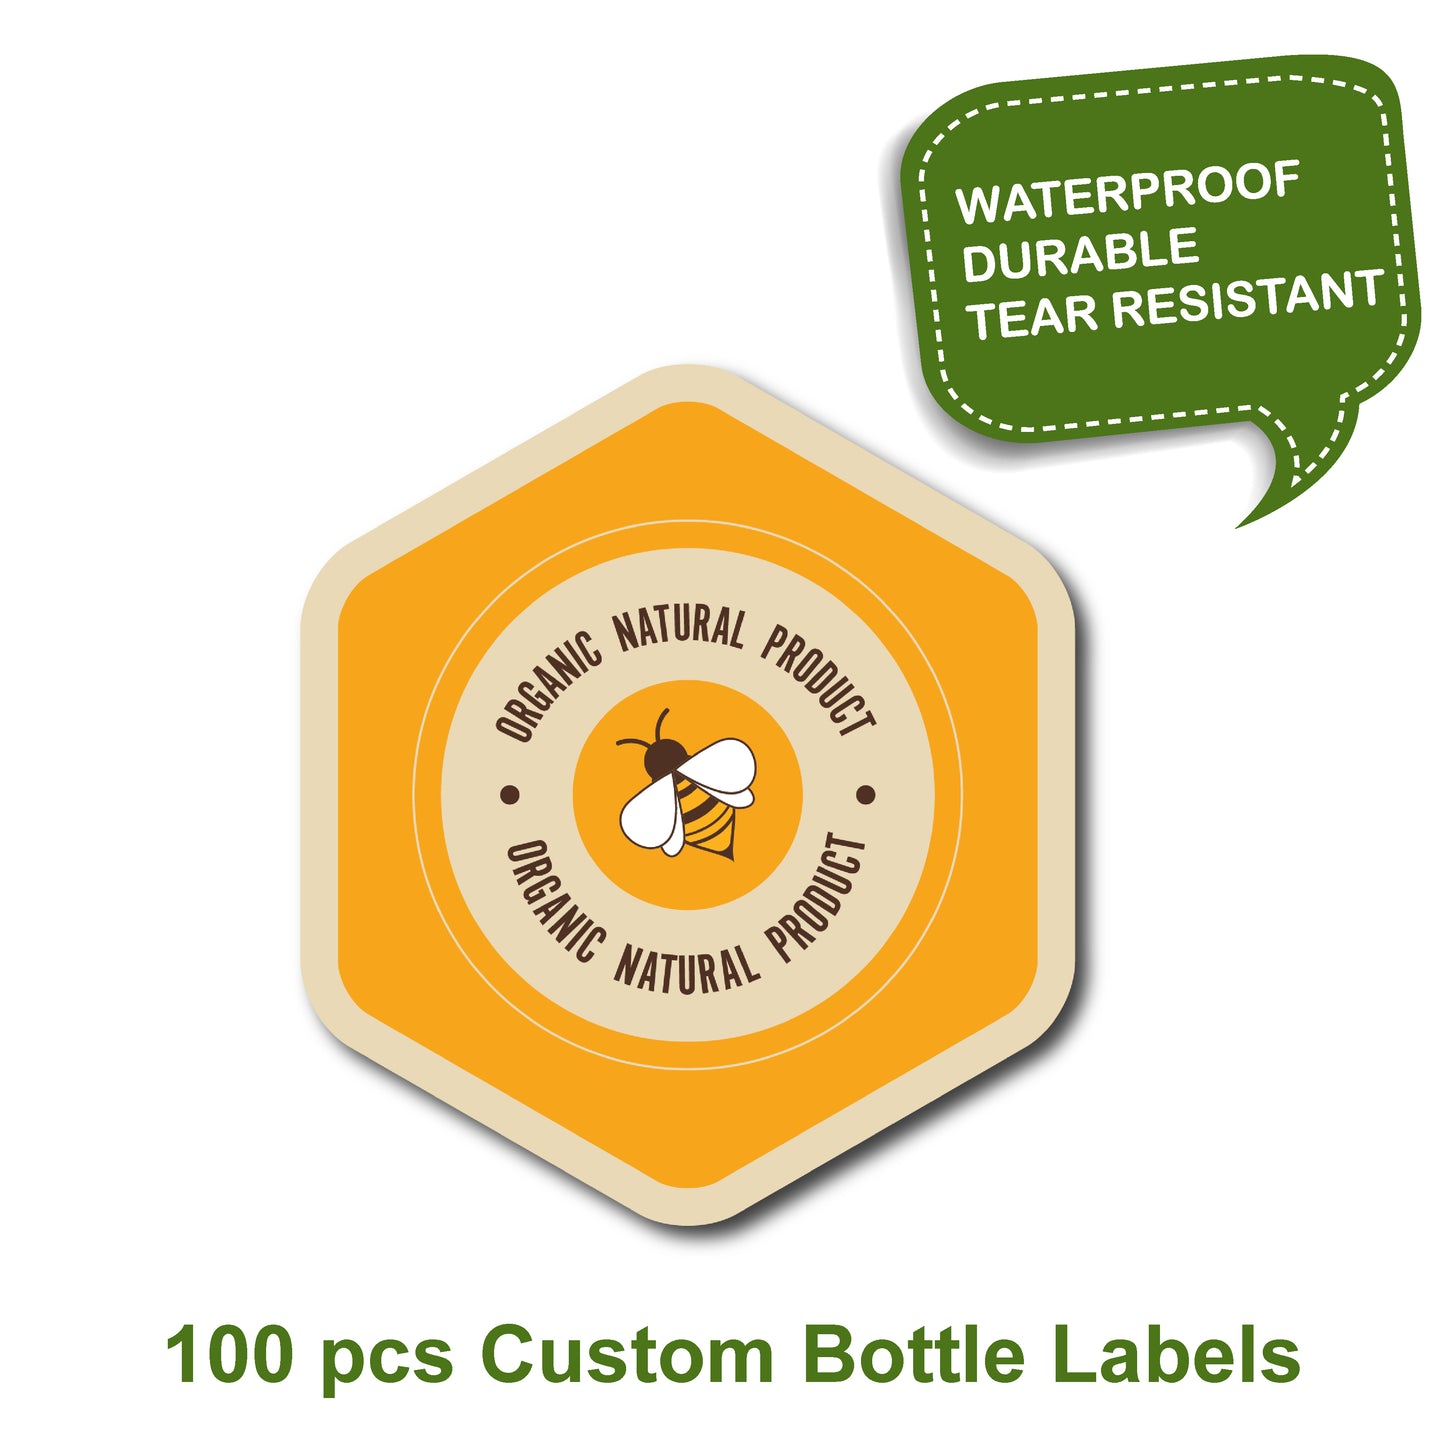 Organic natural product label, 100 pcs Custom bottle labels, custom maple syrup label, custom label, custom candle label, custom product label, labels